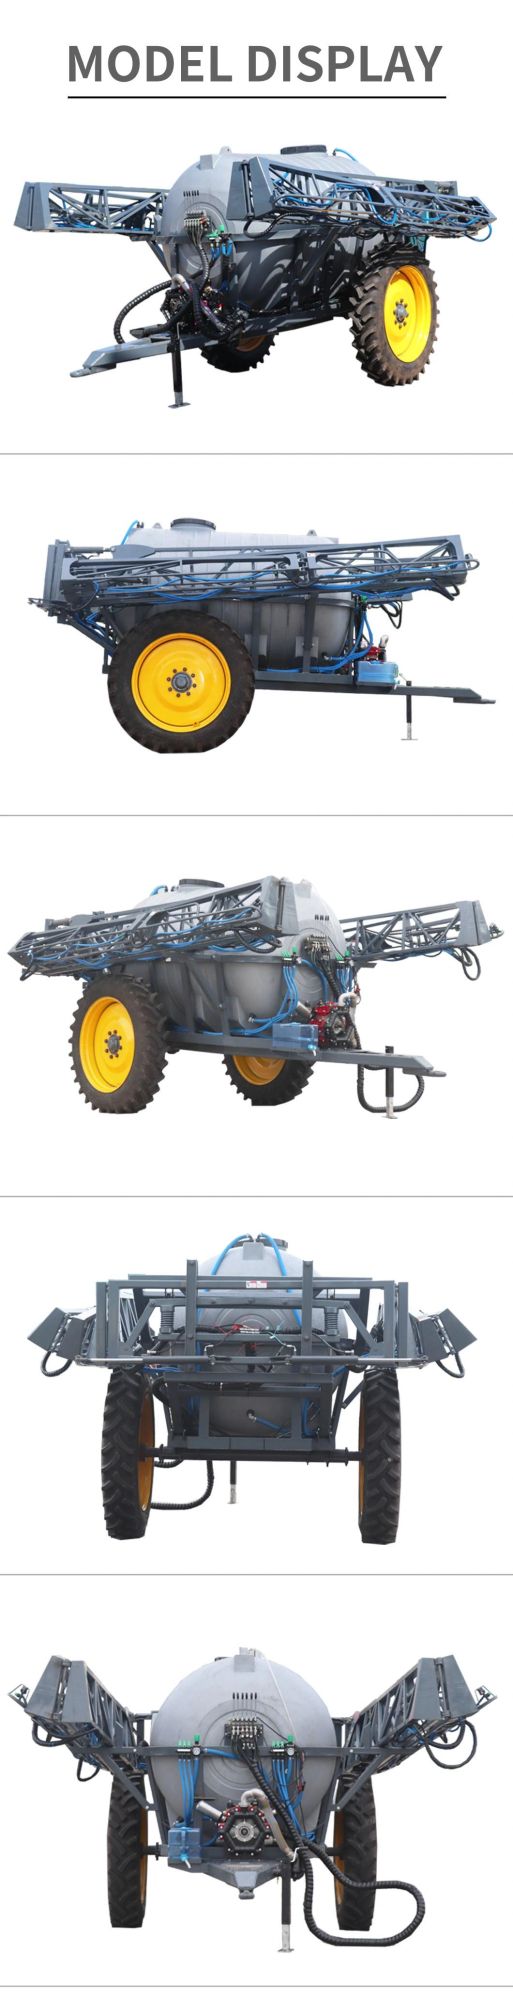 High Quality Drawn Farm Machinery Agricultural Machine Garden Tractor Mounted Boom Sprayer